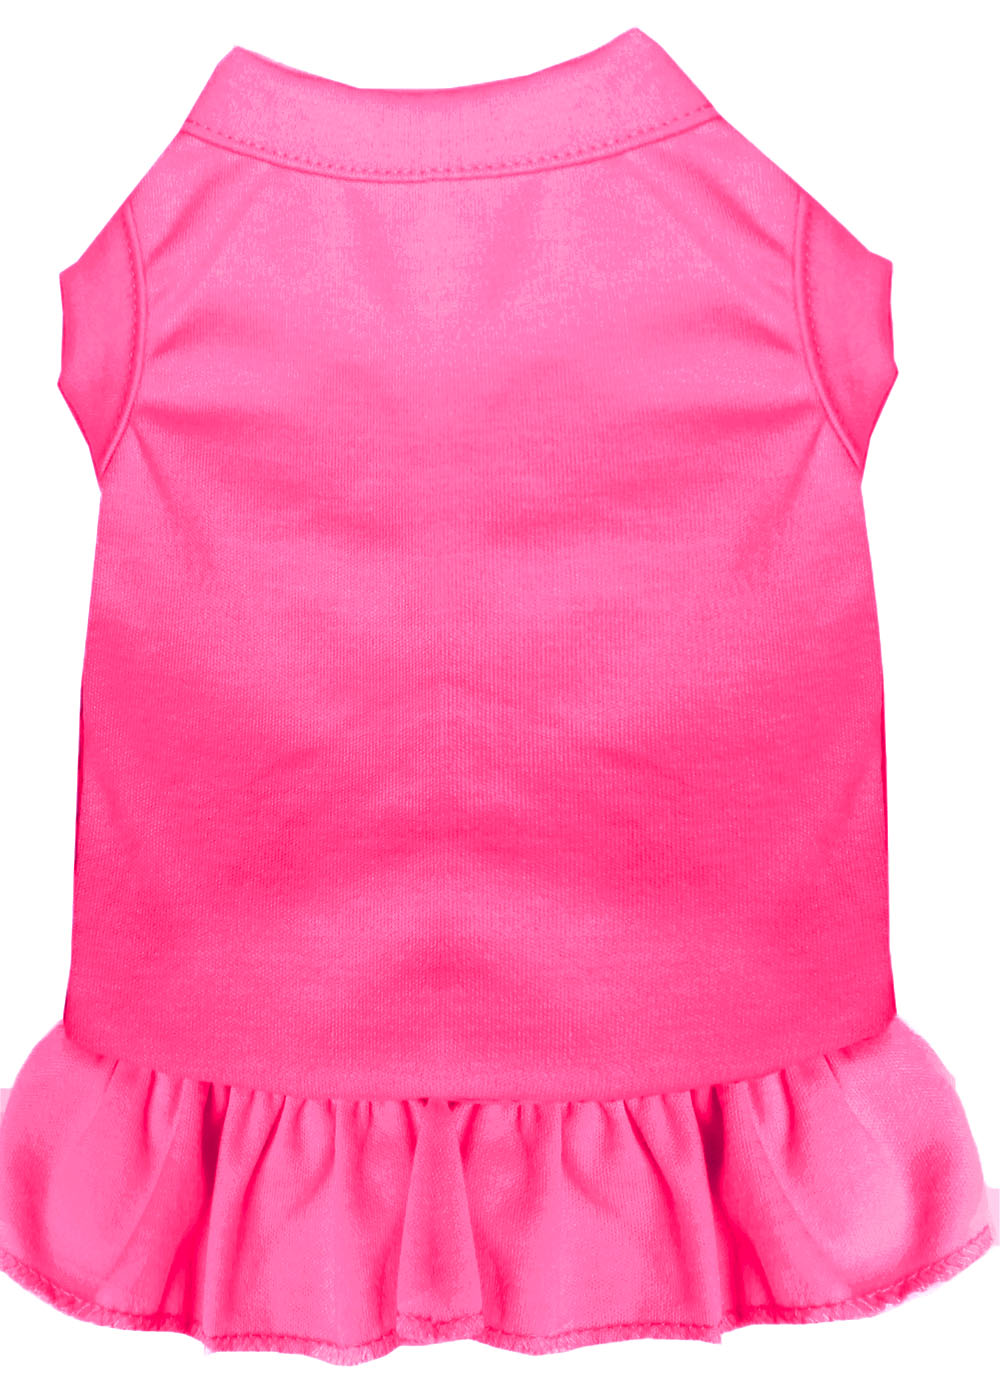 Plain Pet Dress Bright Pink Sm